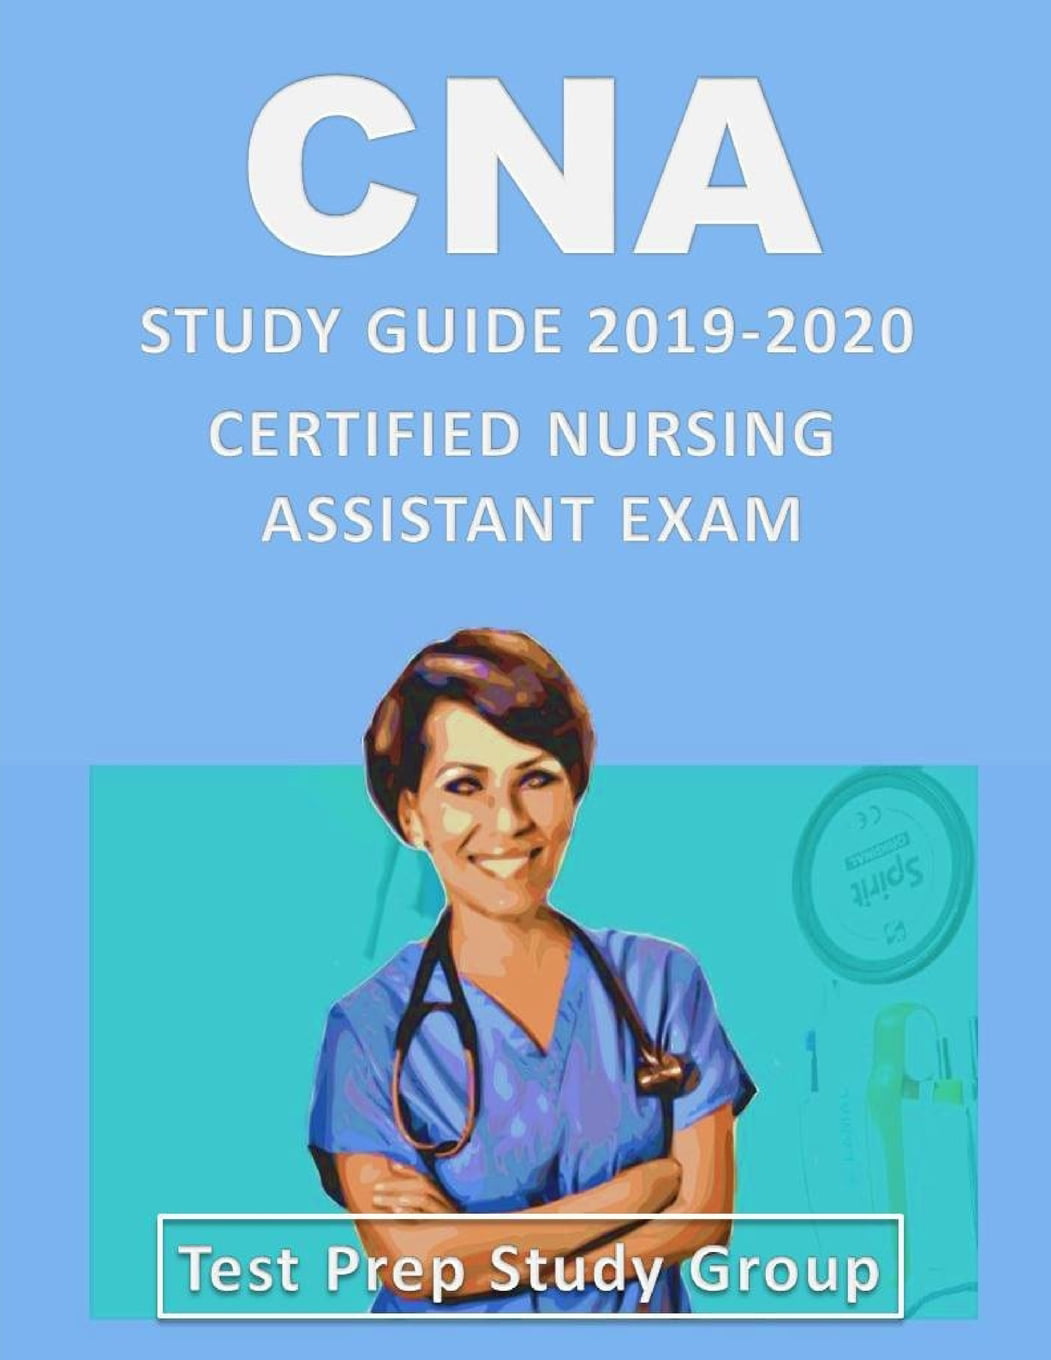 cna-study-guide-2019-2020-certified-nurse-assistant-exam-paperback-walmart-walmart